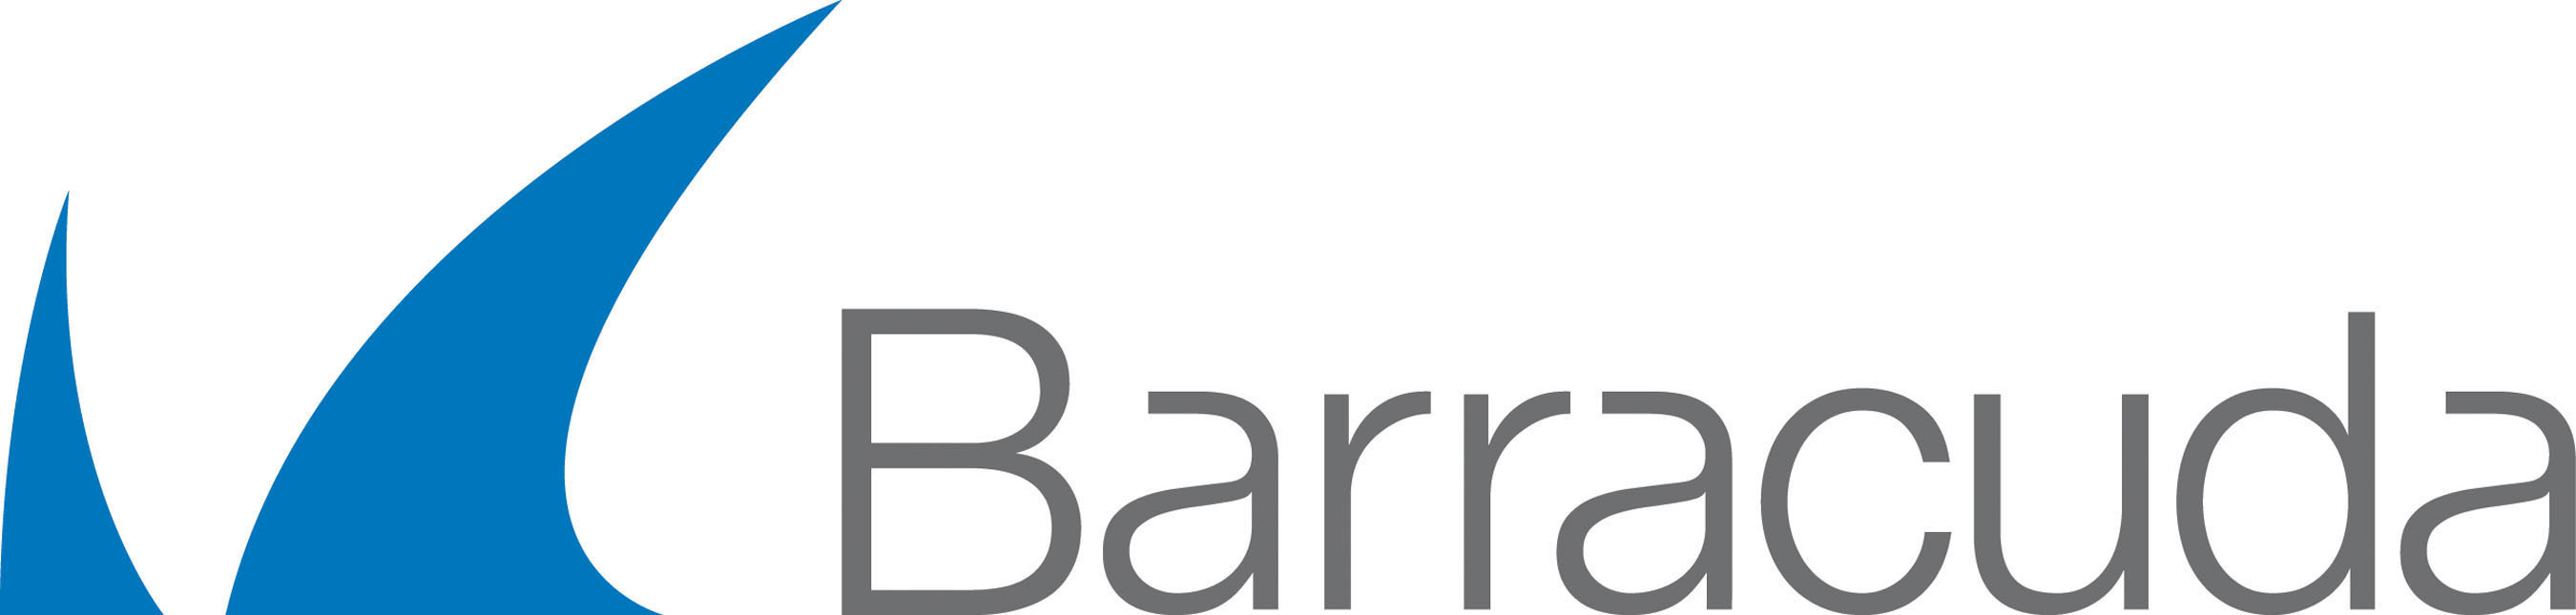 Barracuda Energize Updates - 1 Month - Service